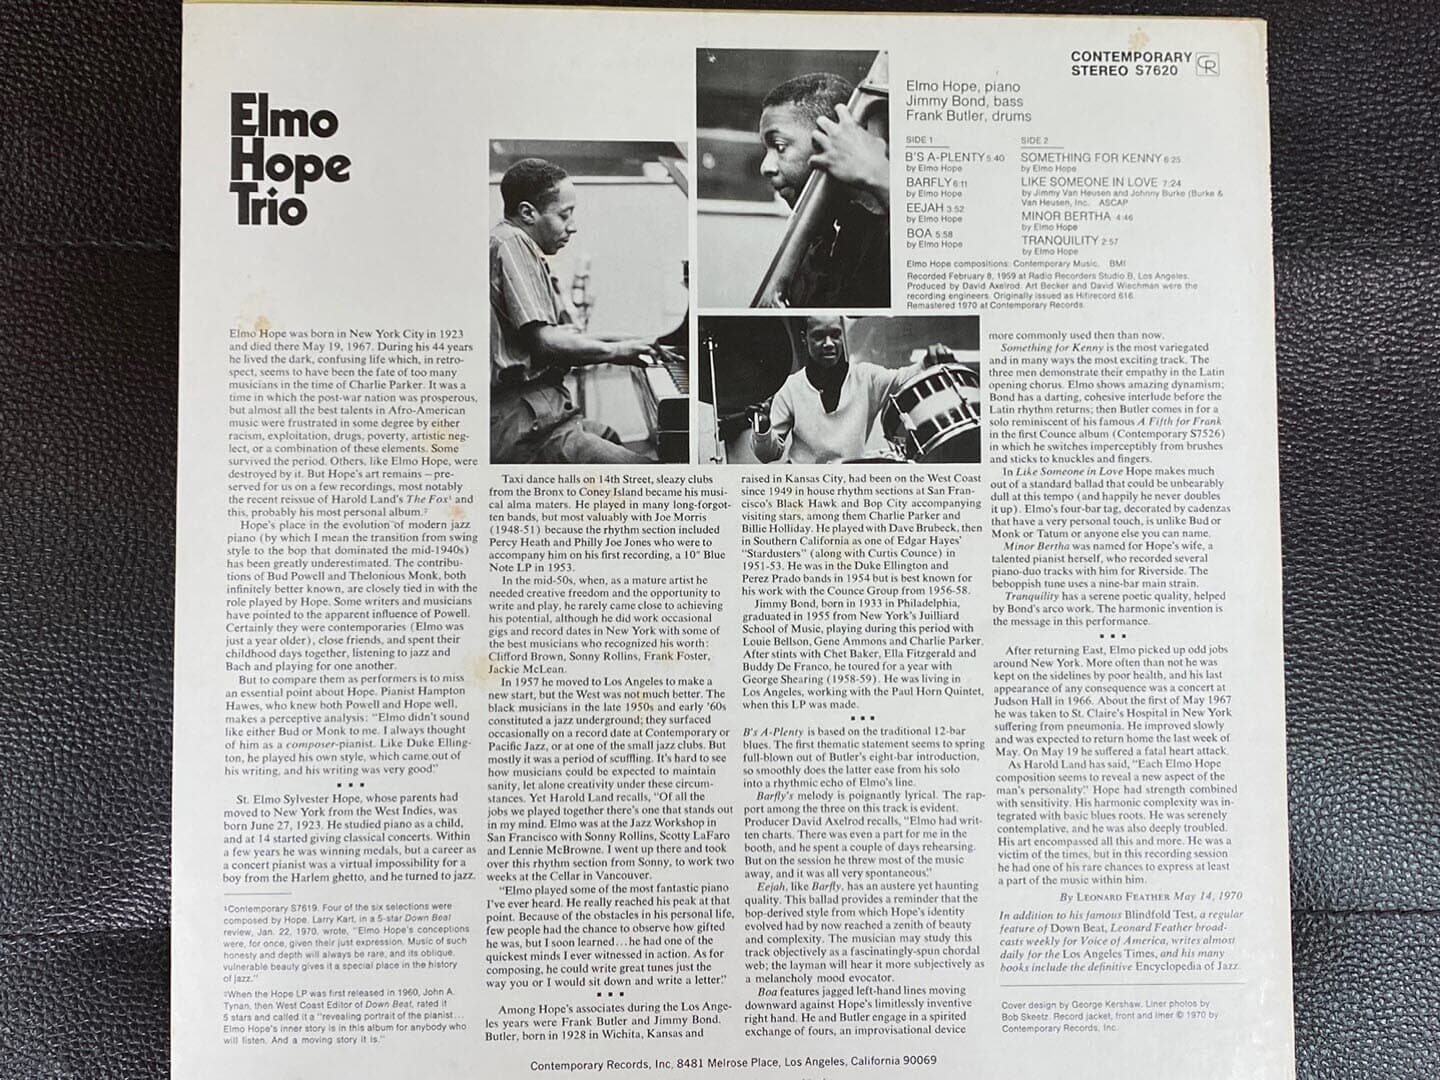 [LP] 엘모 호프 트리오 - Elmo Hope Trio - With Jimmy Bond & Frank Butler LP [1980] [일본반]